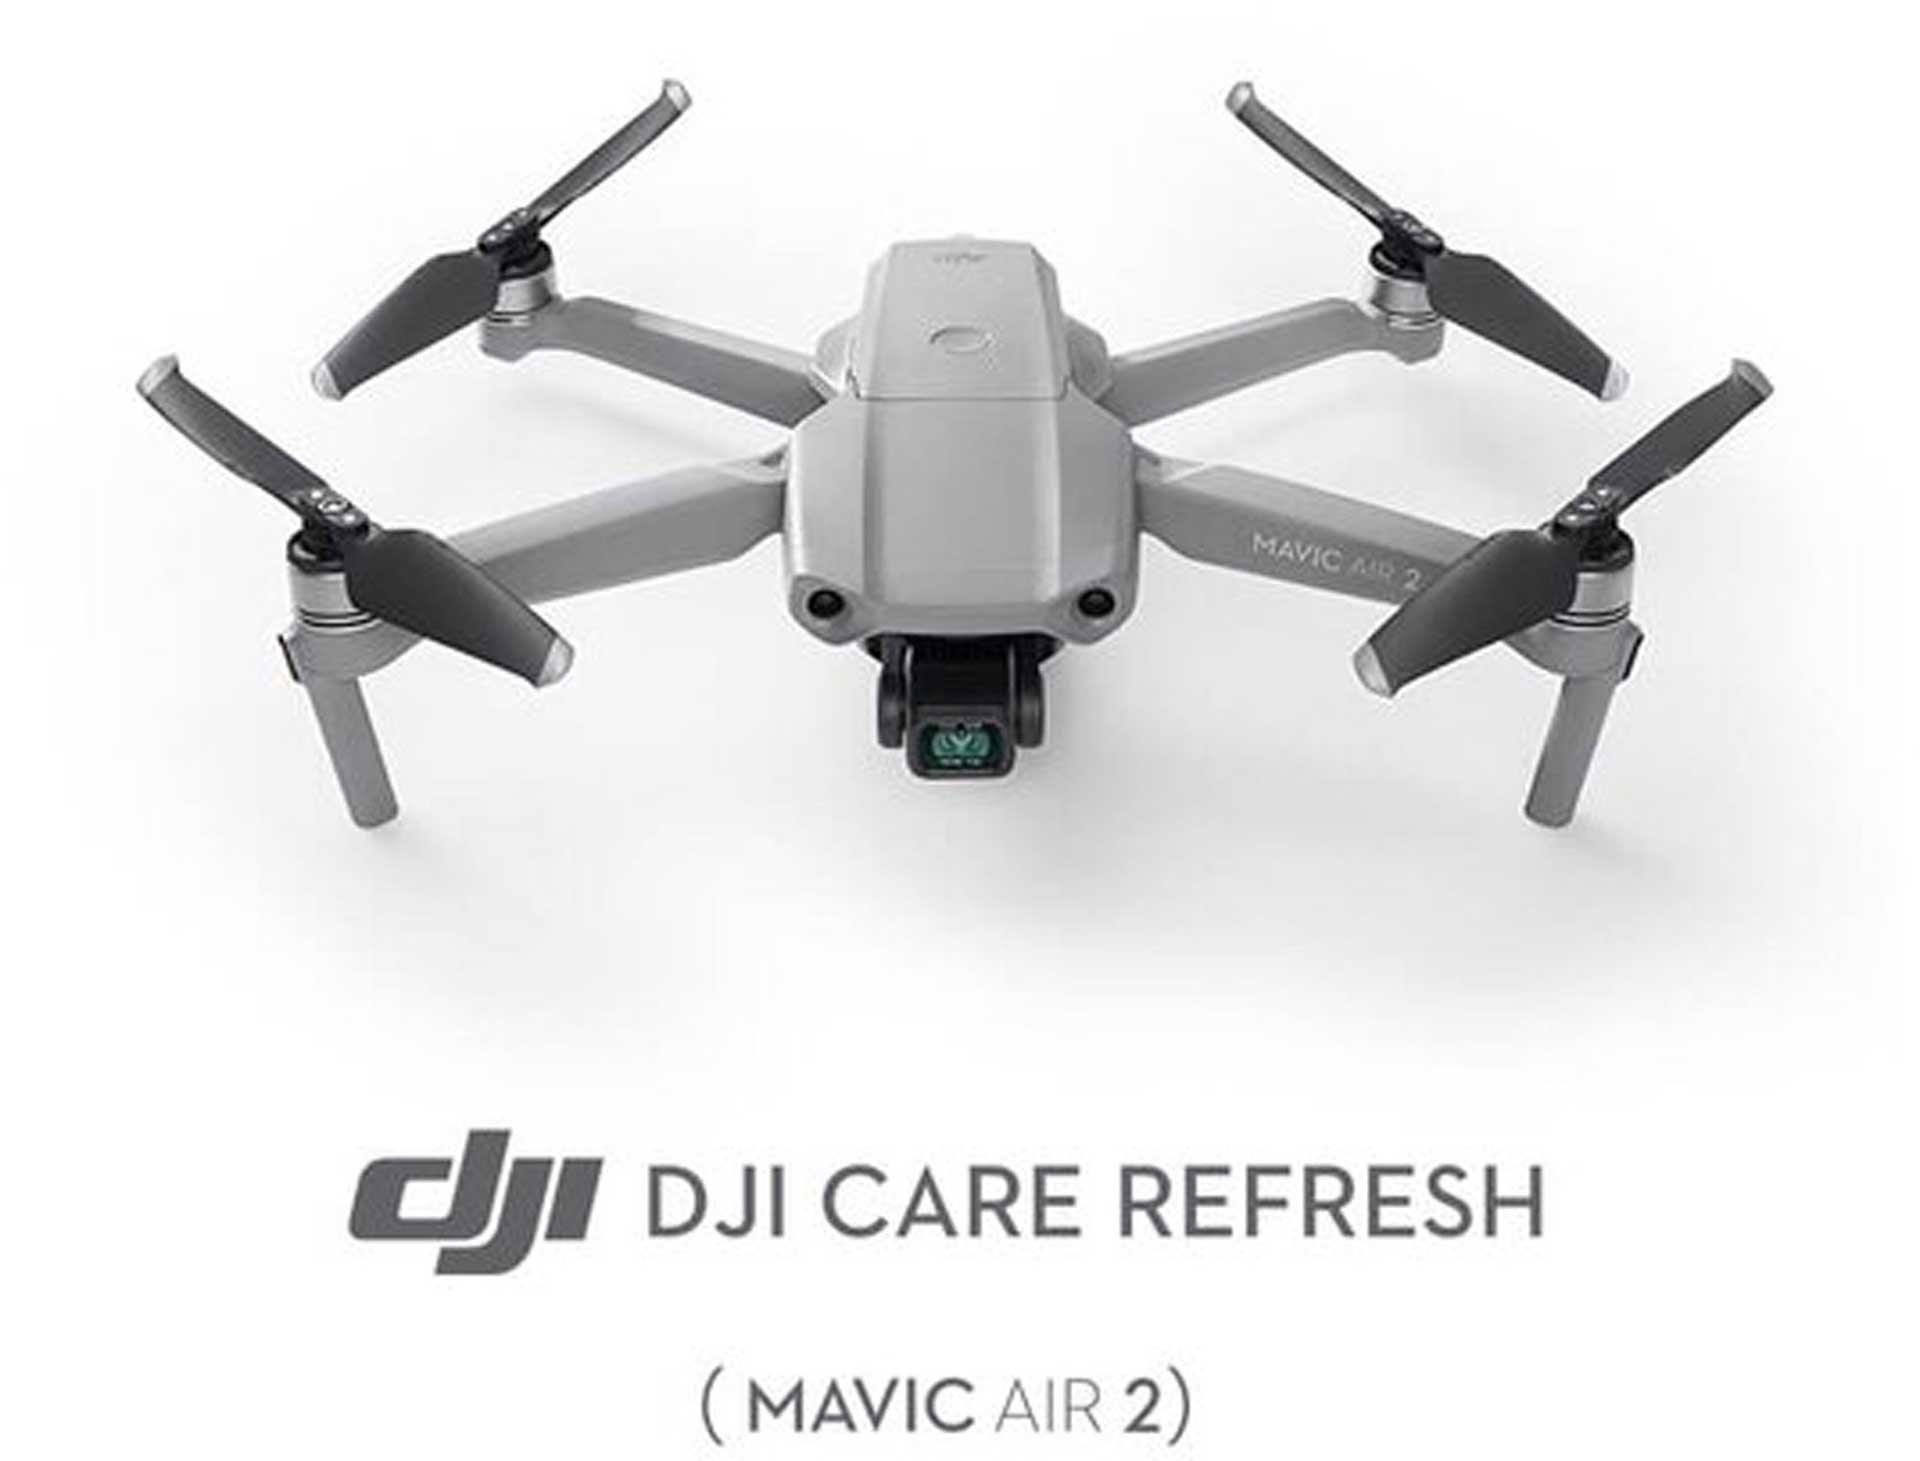 DJI CARE REFRESH MAVIC AIR 2 (Drohne nicht im Lieferumfang enthalten!!)